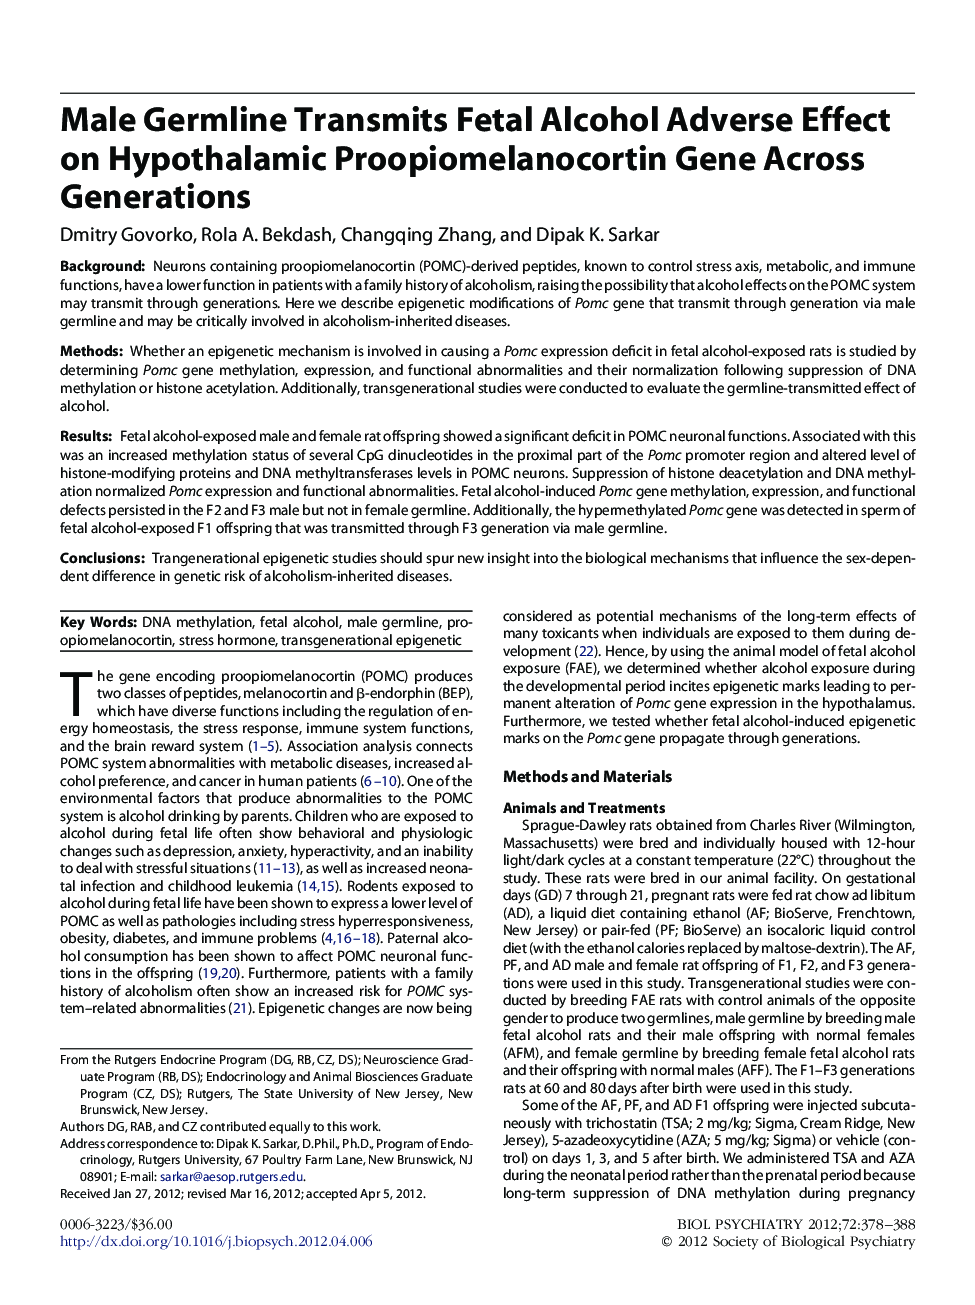 Male Germline Transmits Fetal Alcohol Adverse Effect on Hypothalamic Proopiomelanocortin Gene Across Generations 